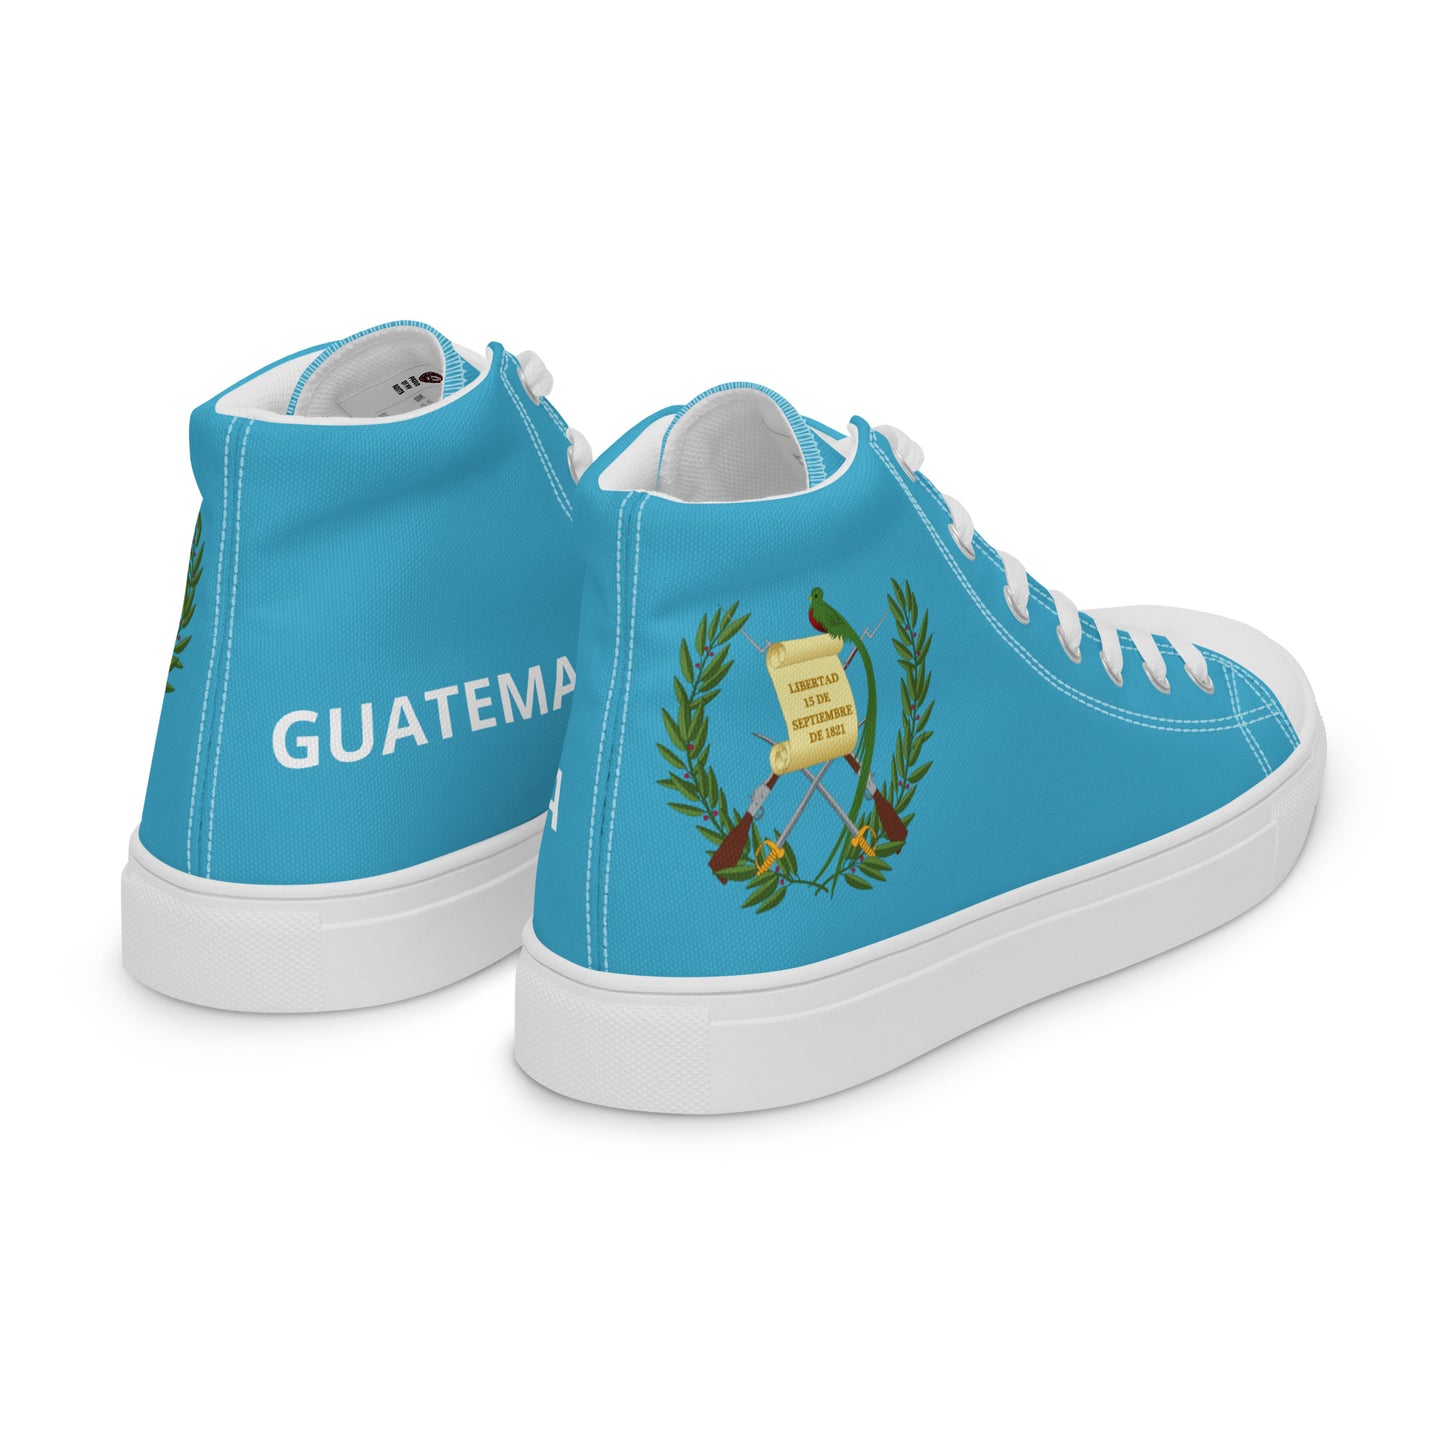 Guatemala - Men - Sky - High top shoes